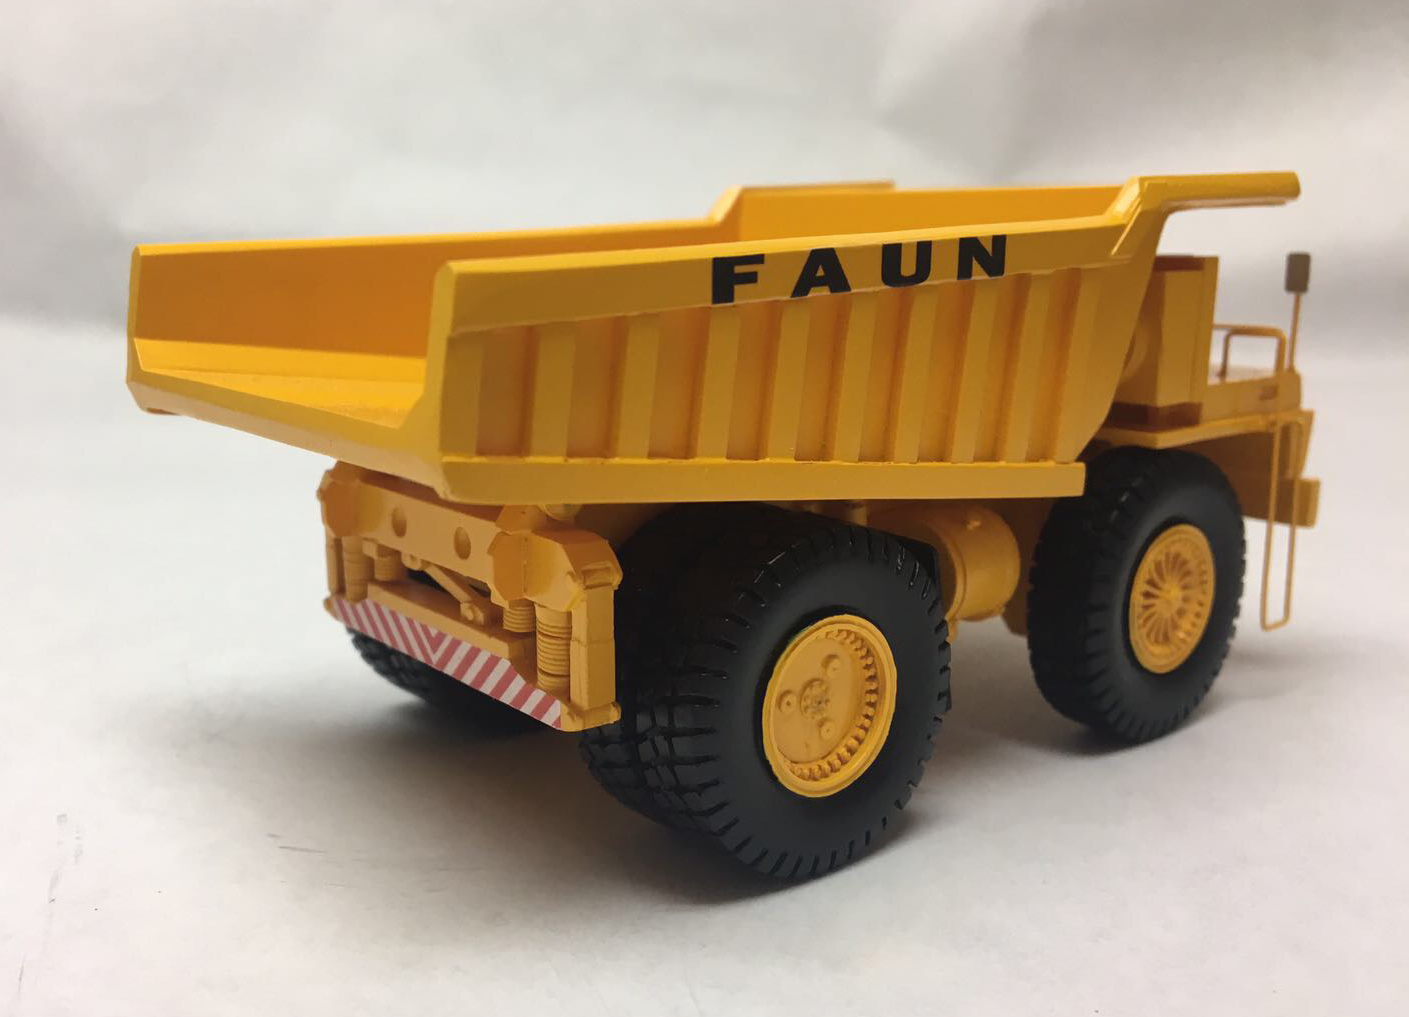 Details about   HO 1/87 Faun K80/W 4x2 Dump Truck Ready Made Resin Model by Fankit Models 